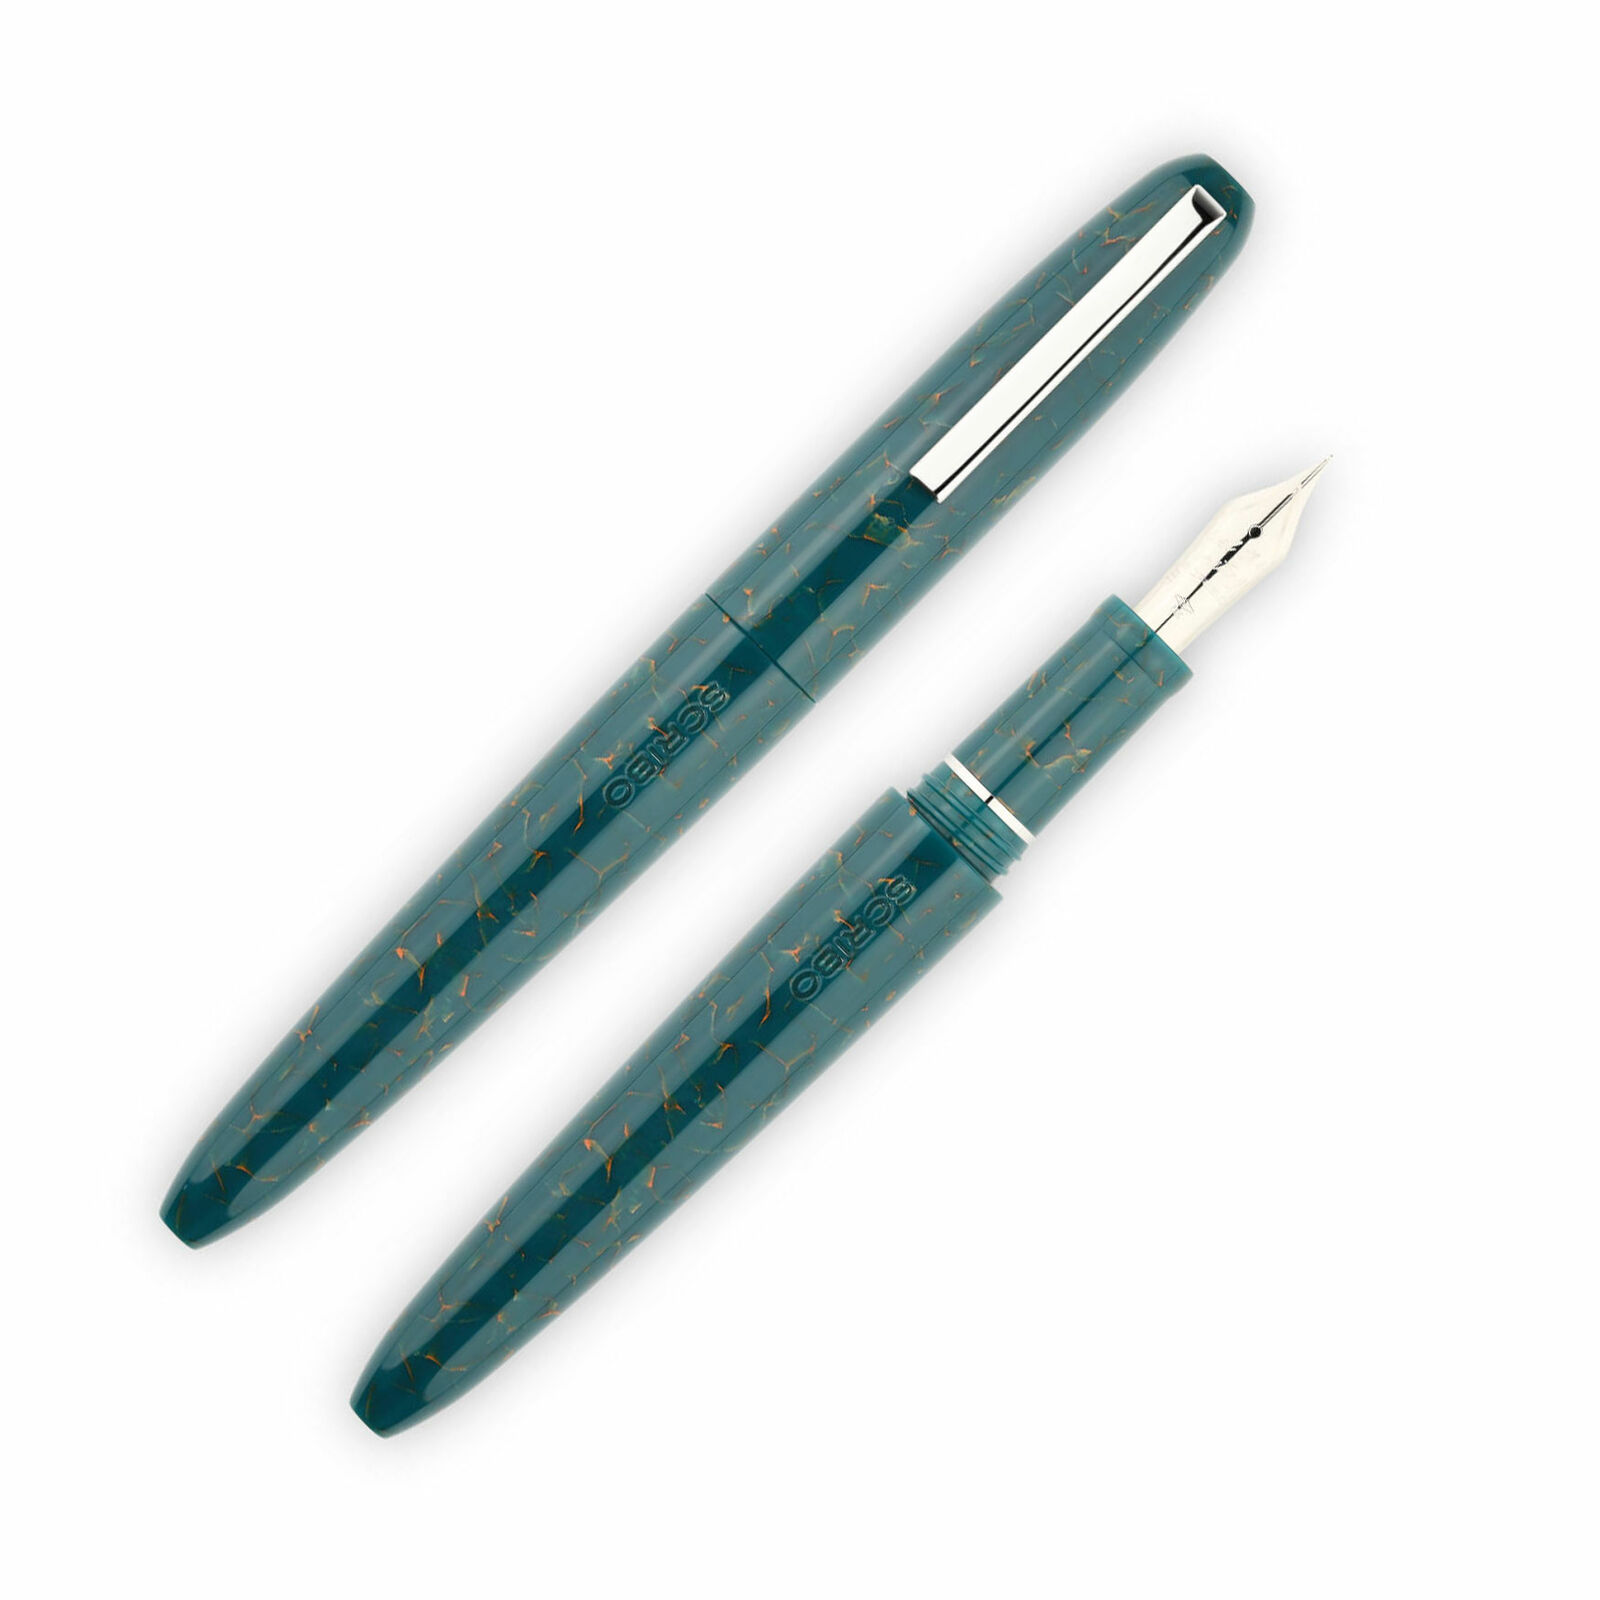 Scribo Piuma Fountain Pen in Impressione 14K Flexible Gold Nib - Medium Point